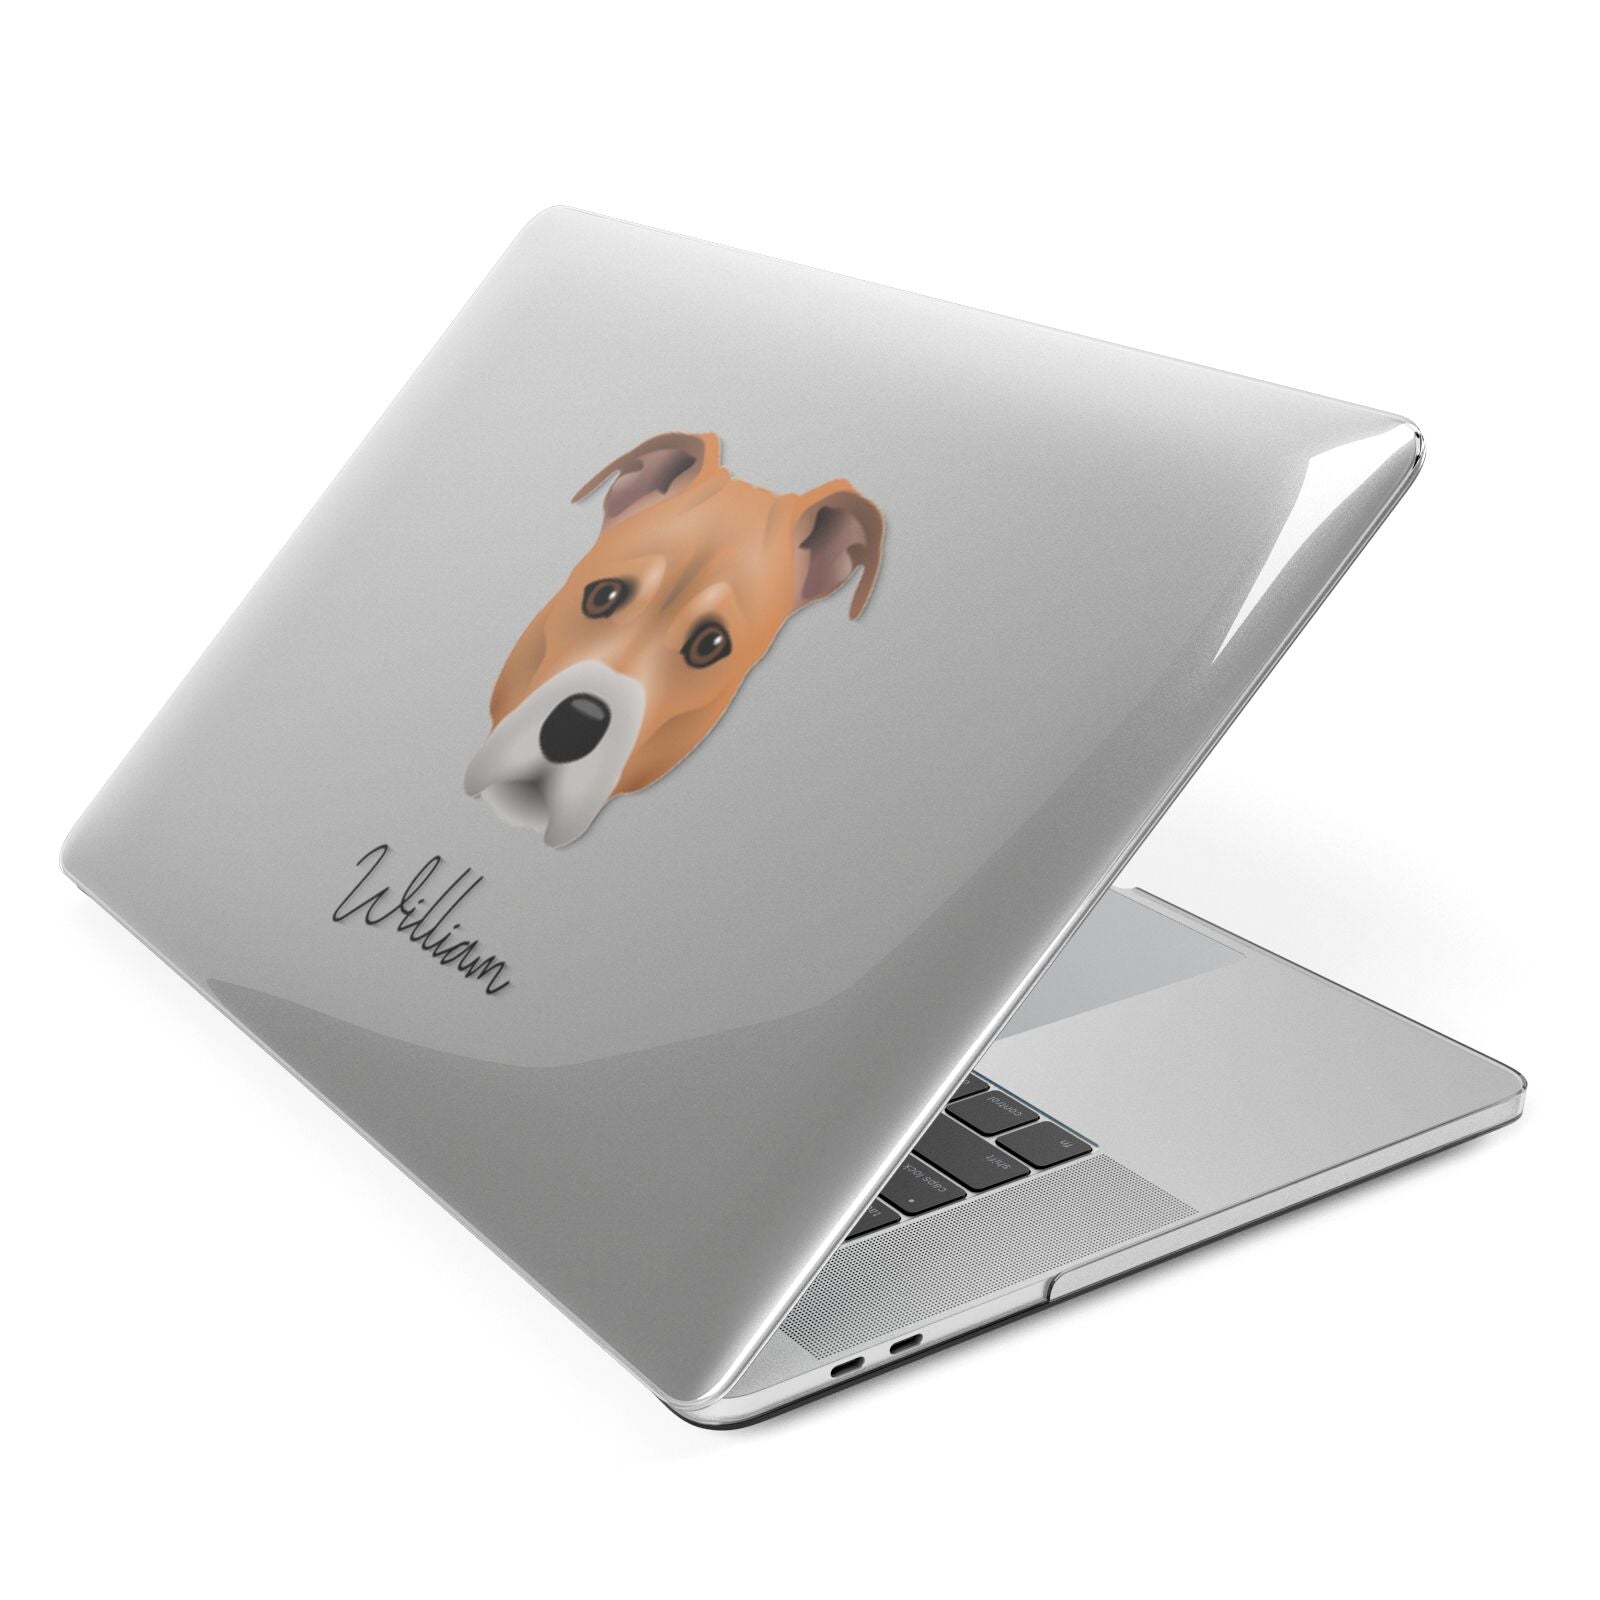 Staffordshire Bull Terrier Personalised Apple MacBook Case Side View